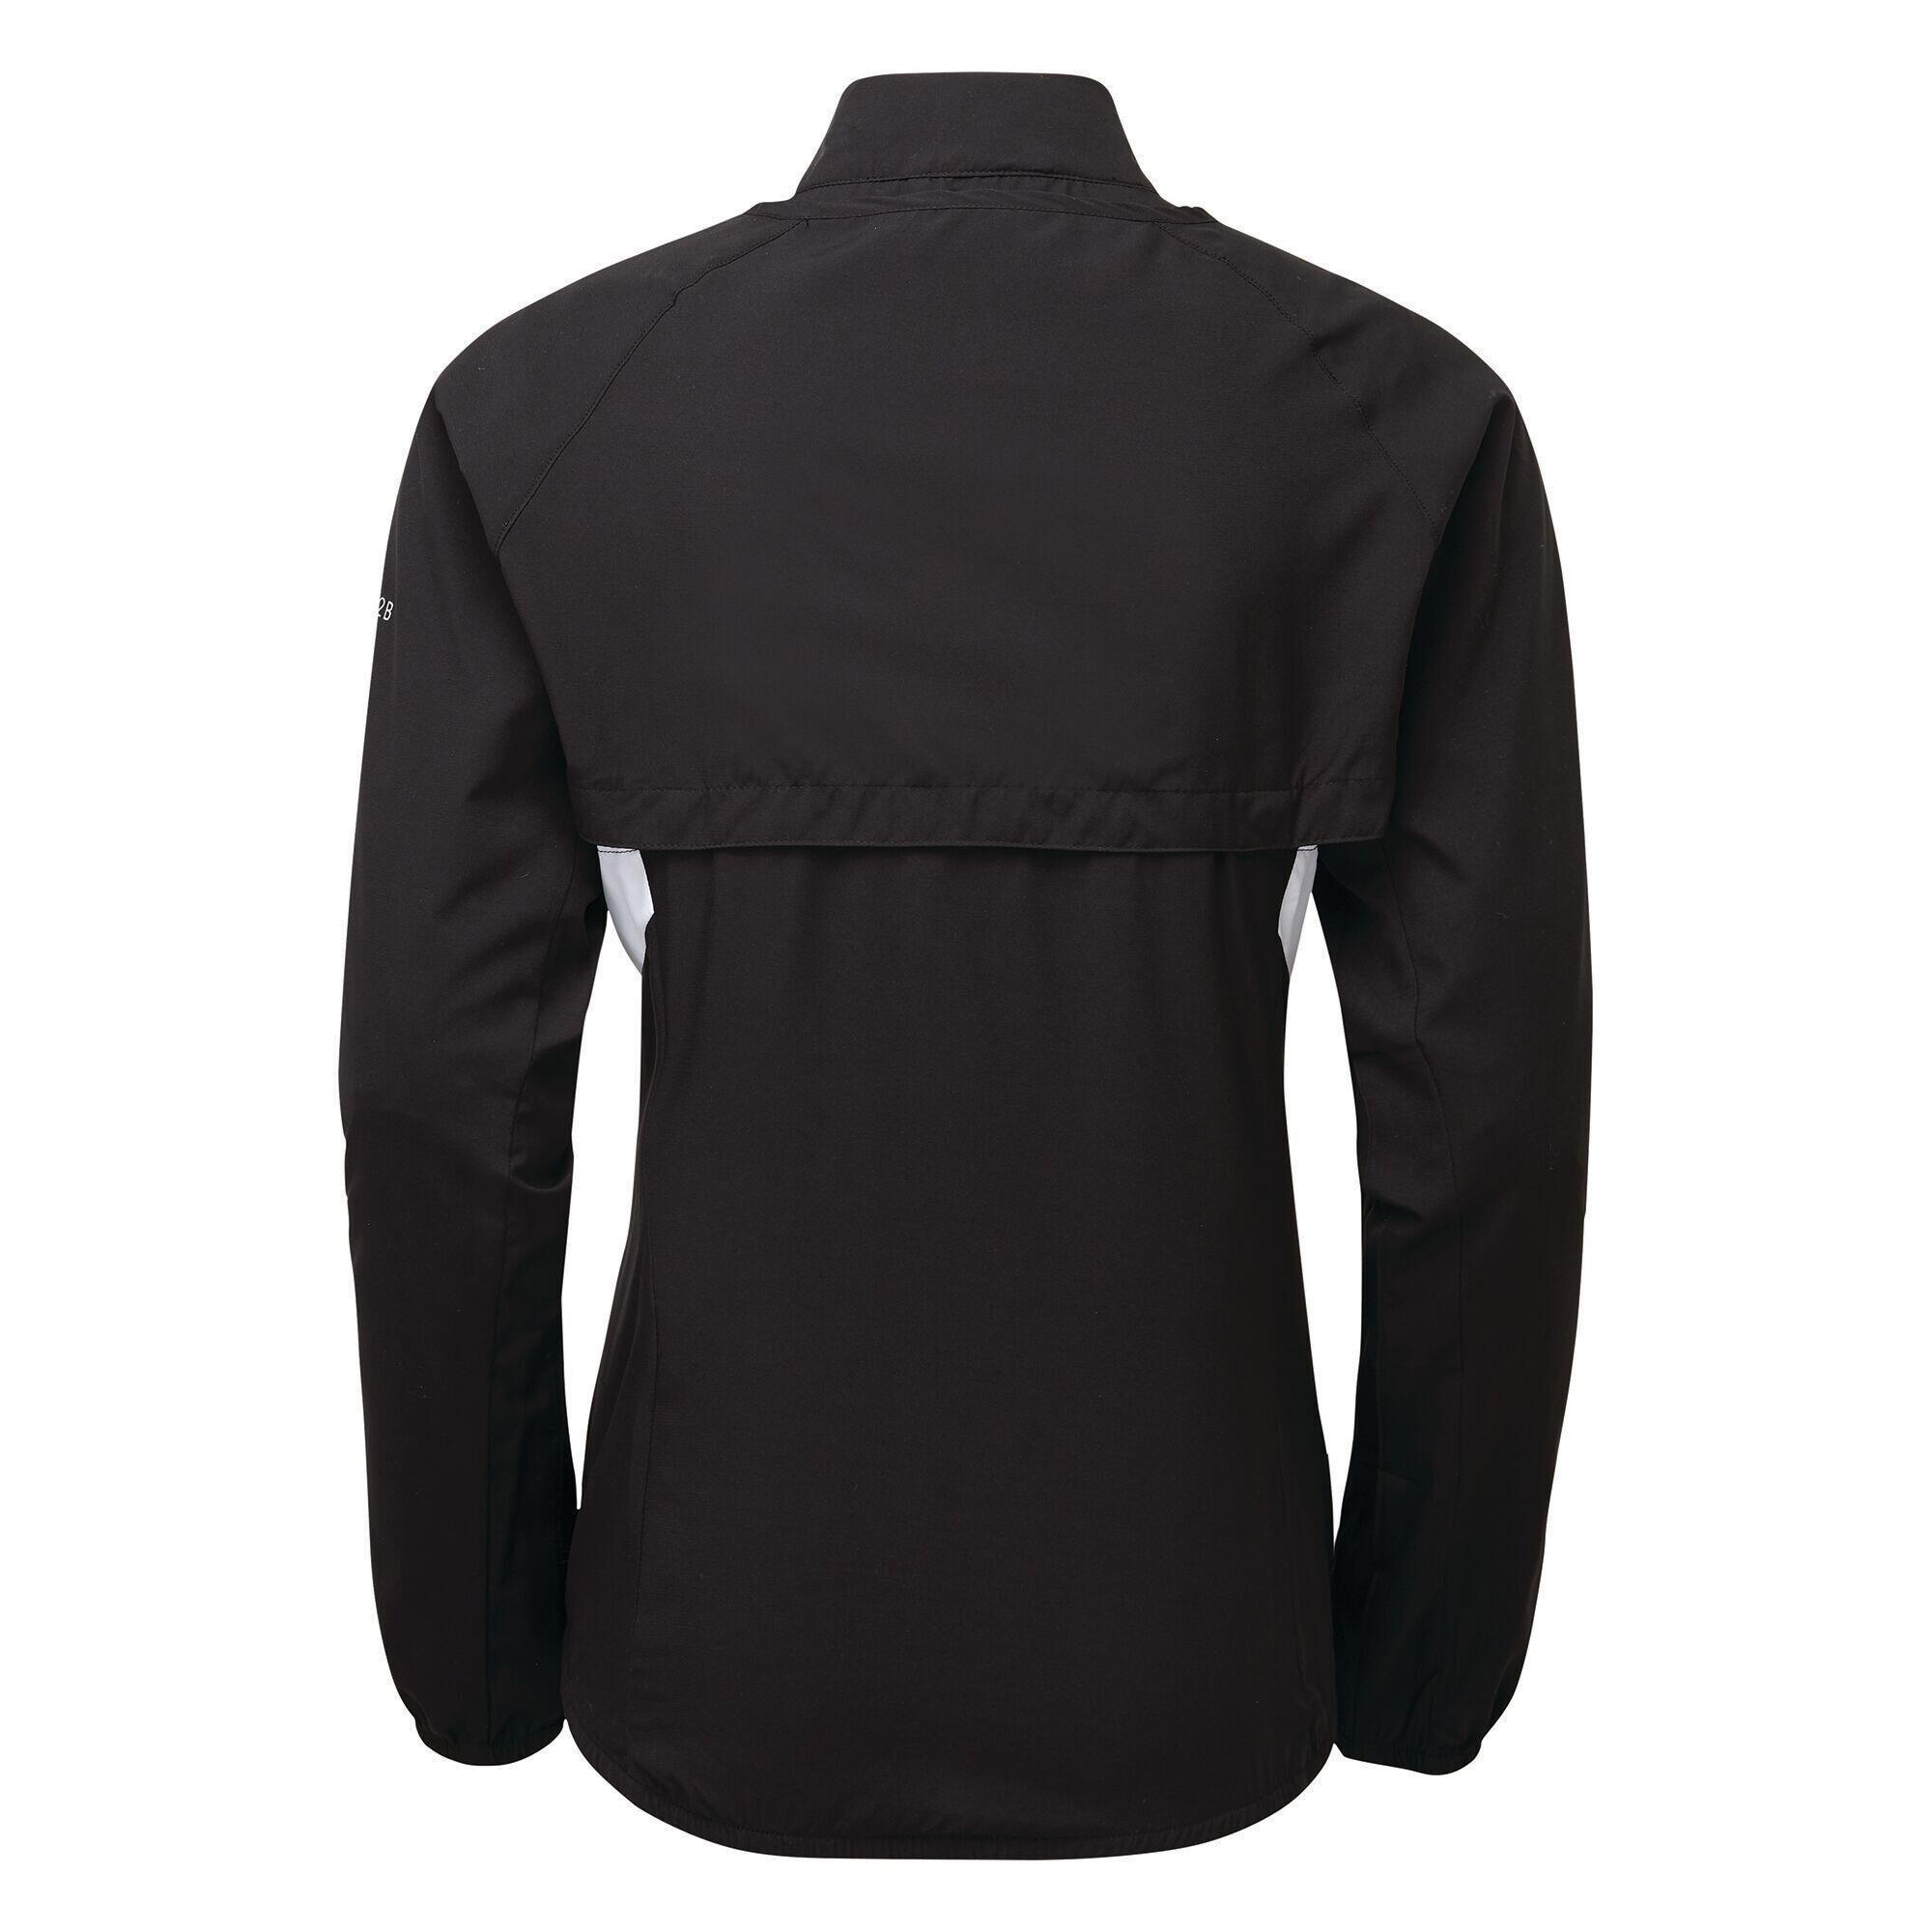 Womens/Ladies Rebound Jacket (Black) 2/5